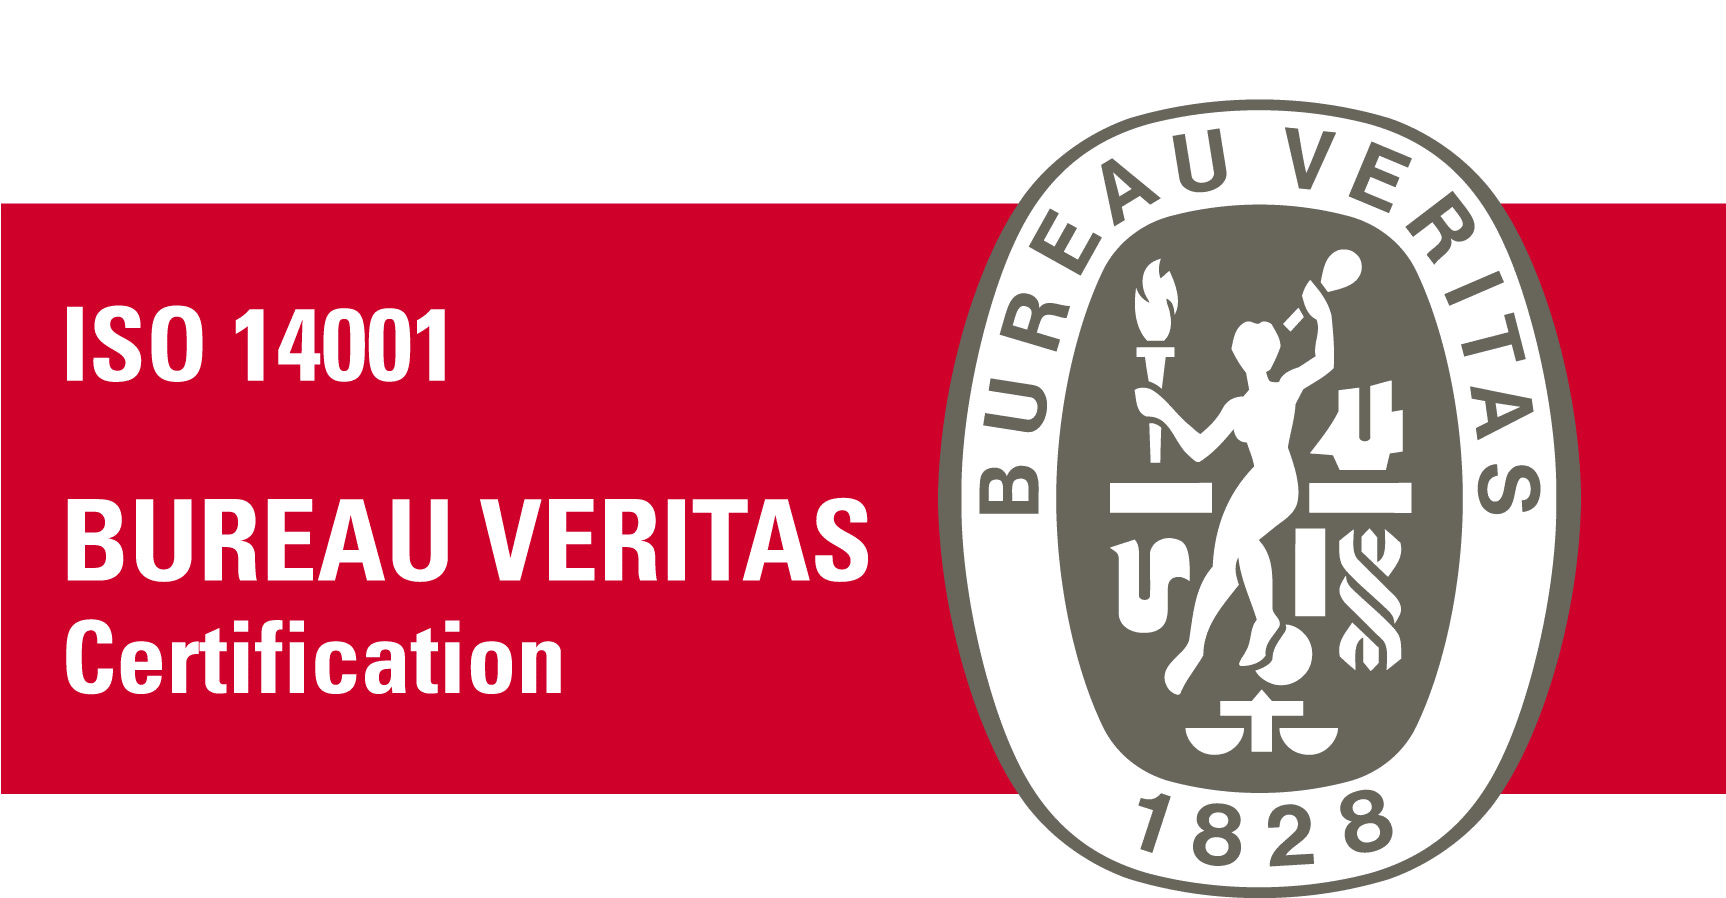 Certification ISO 14001 BUREAU VERITAS